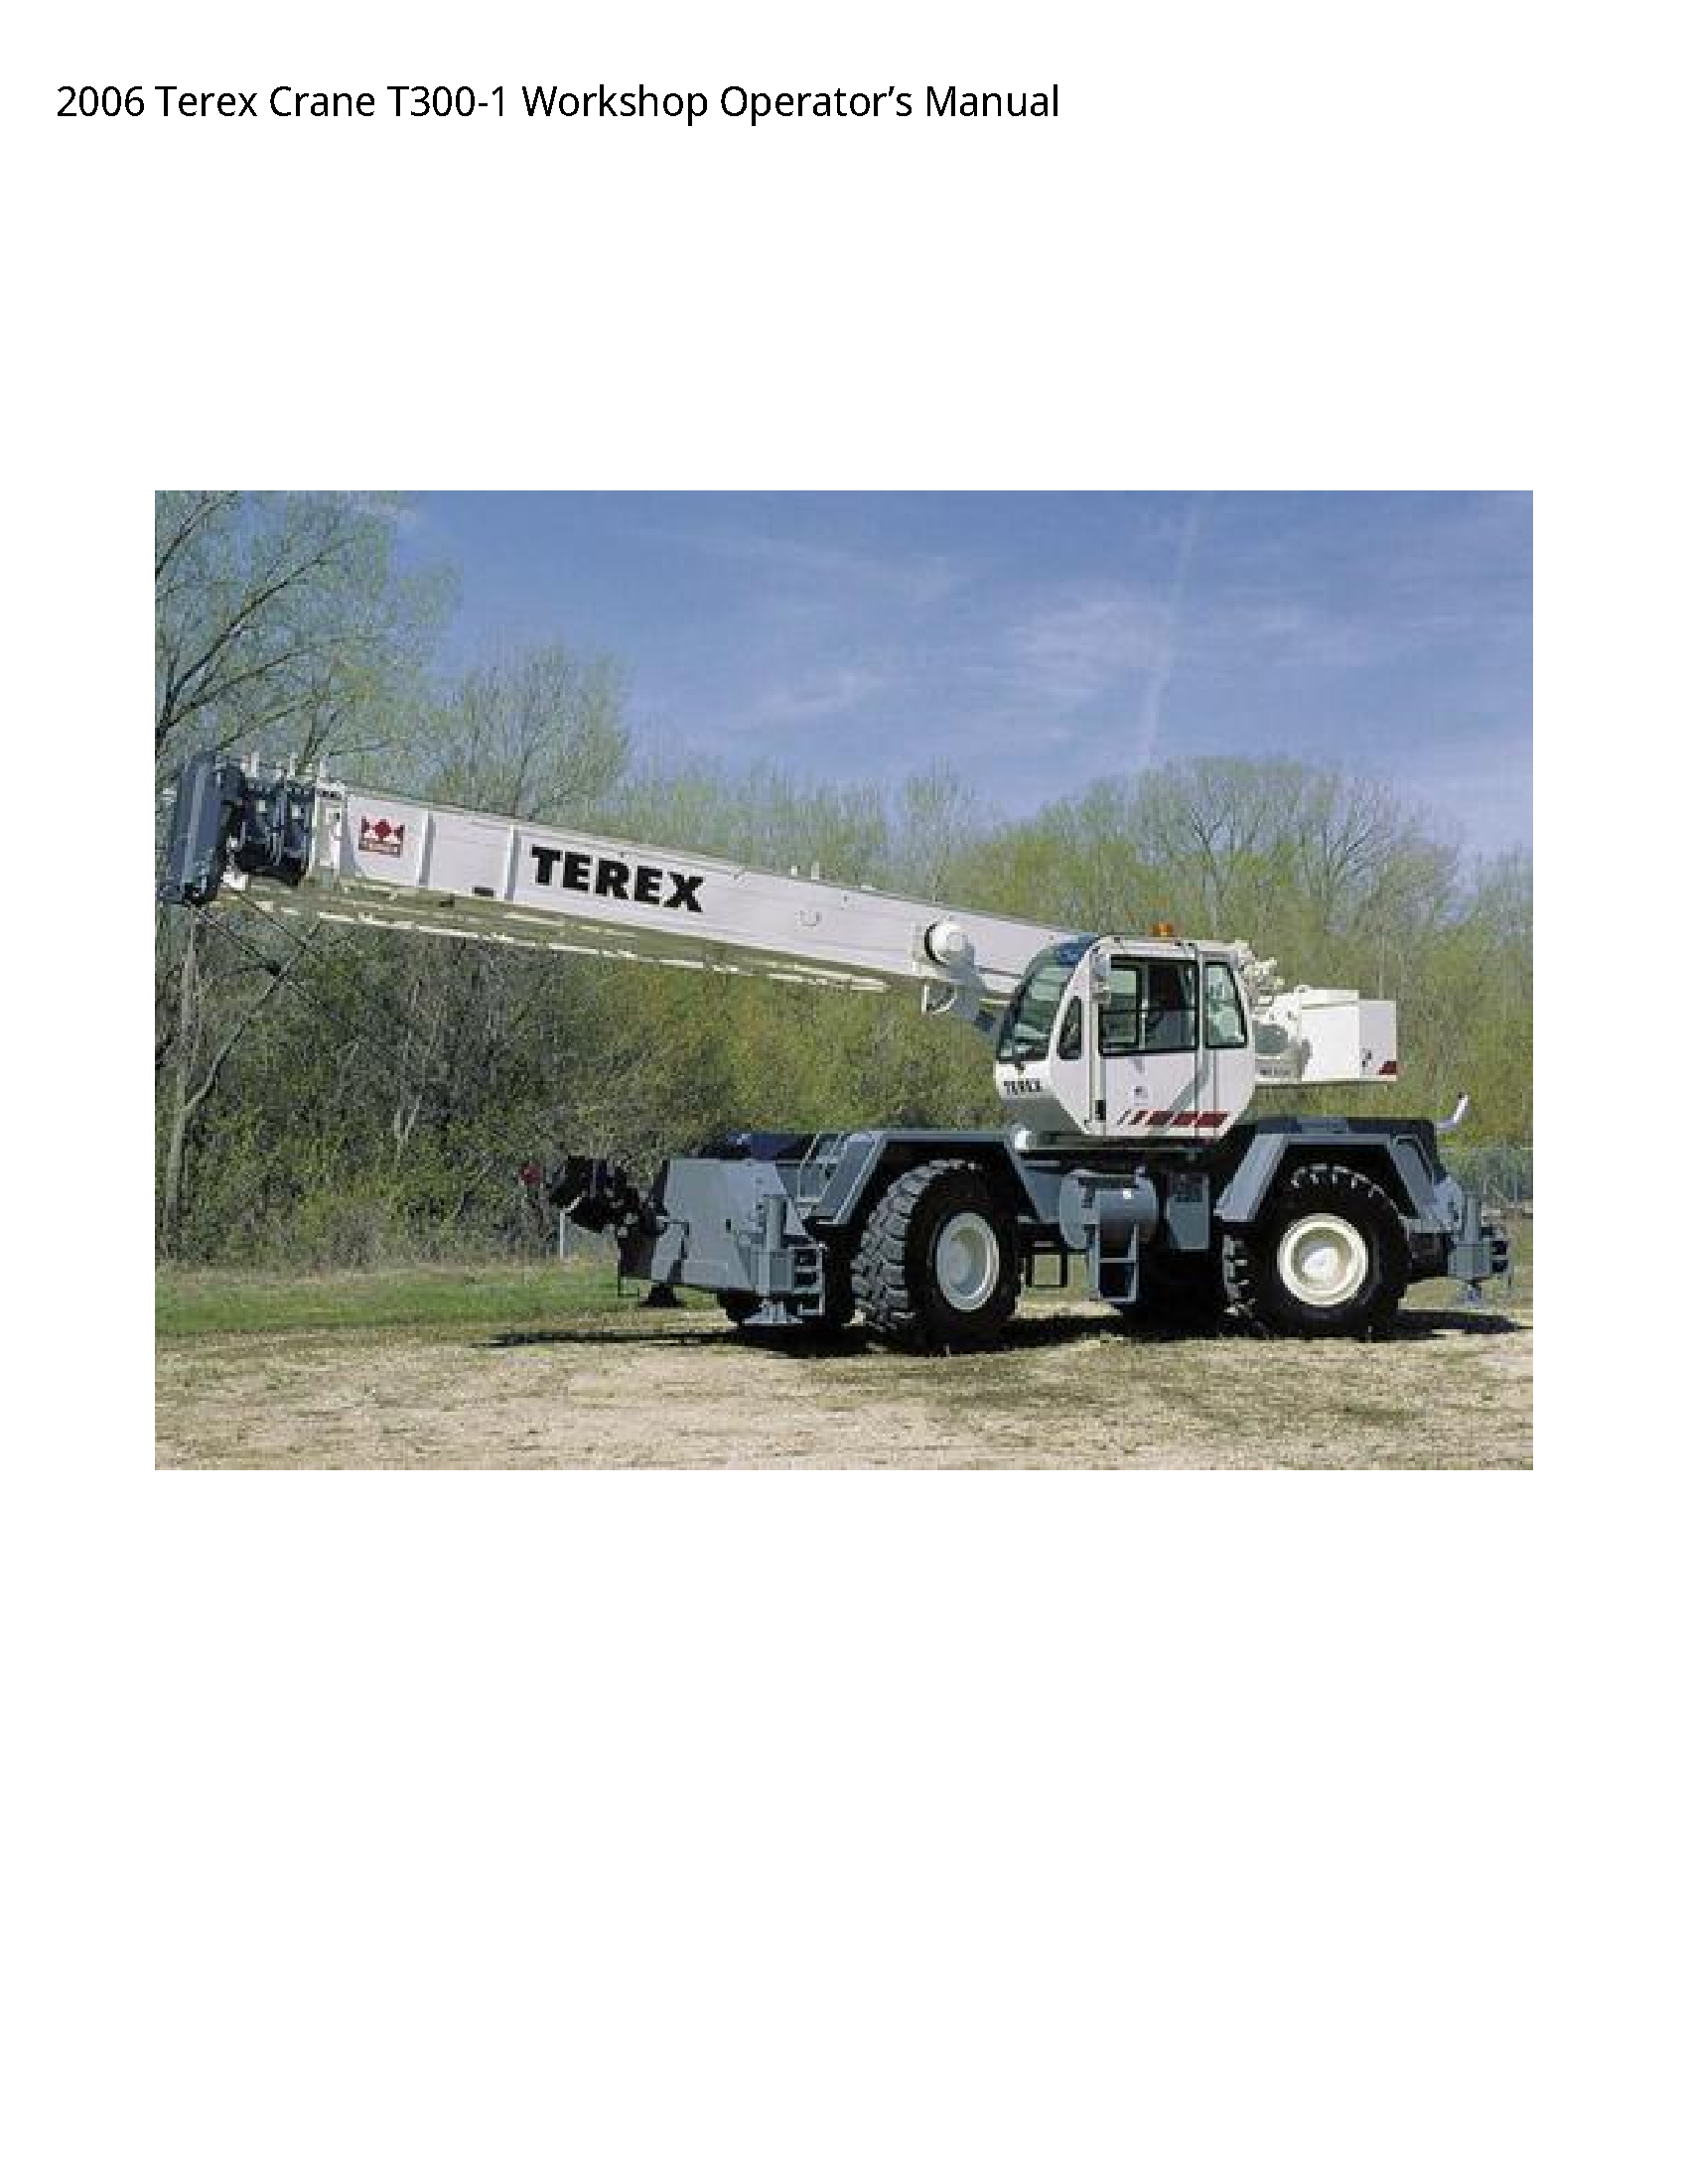 Terex T300-1 Crane Operator’s manual